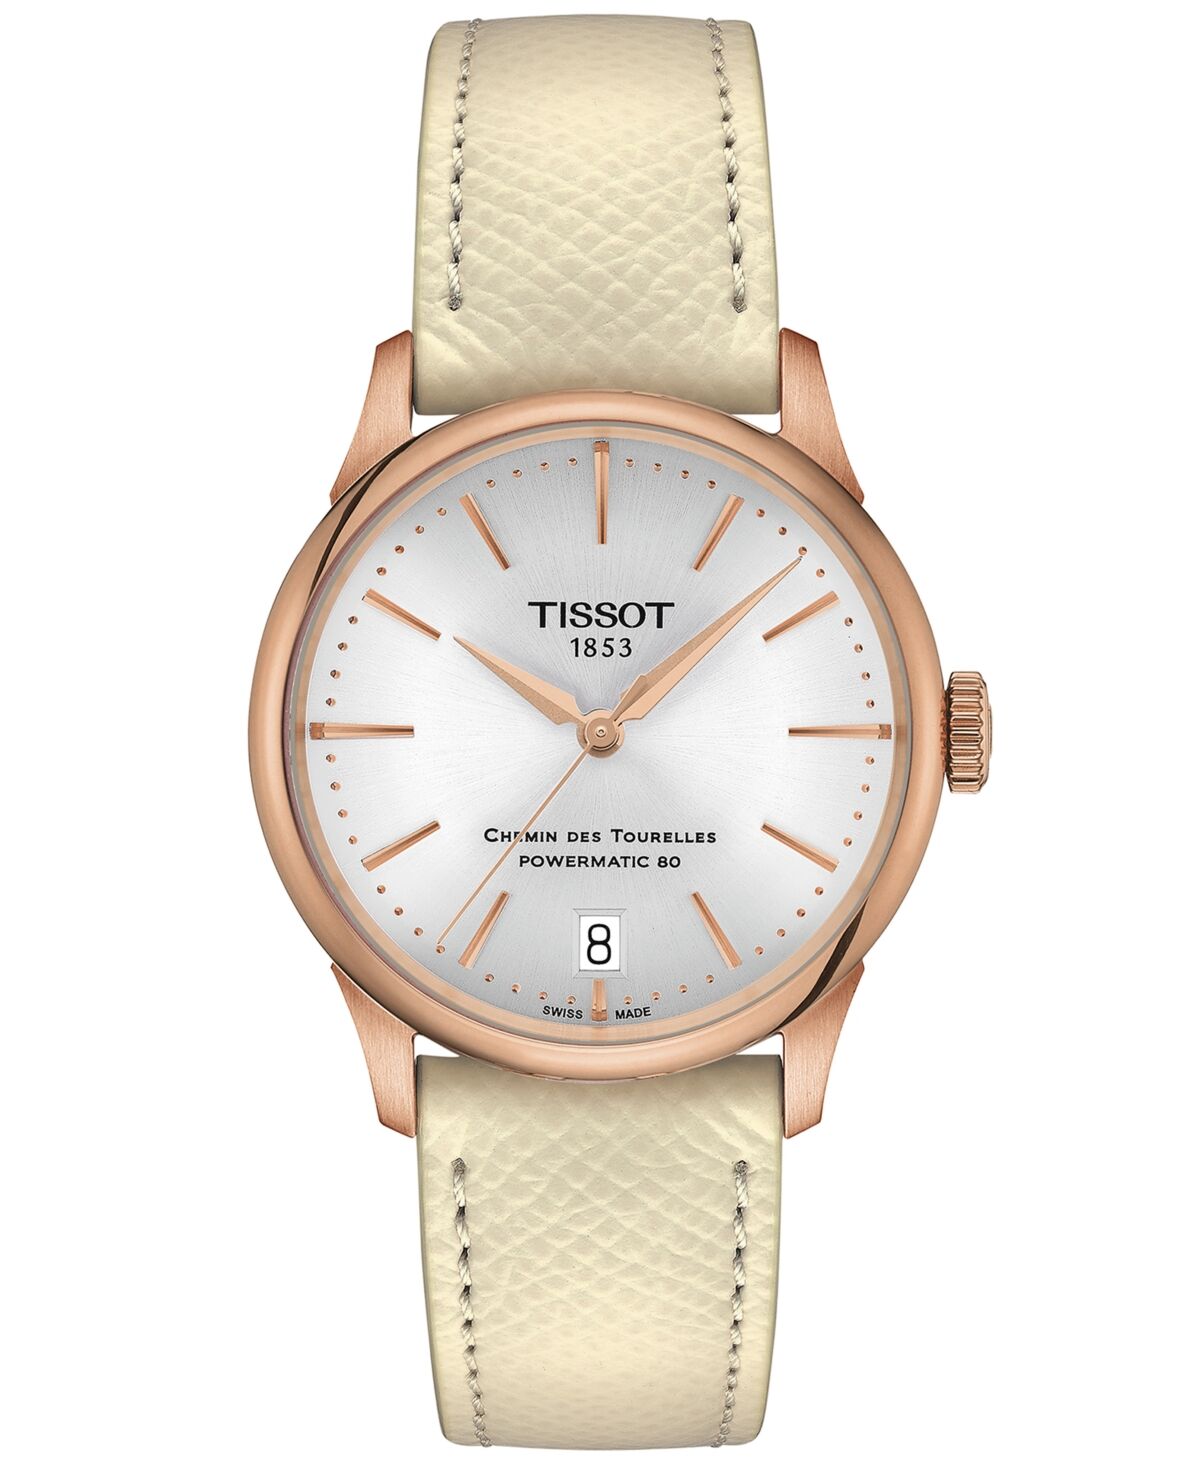 Tissot Women's Swiss Automatic Chemin des Tourelles Powermatic 80 White Leather Strap Watch 34mm